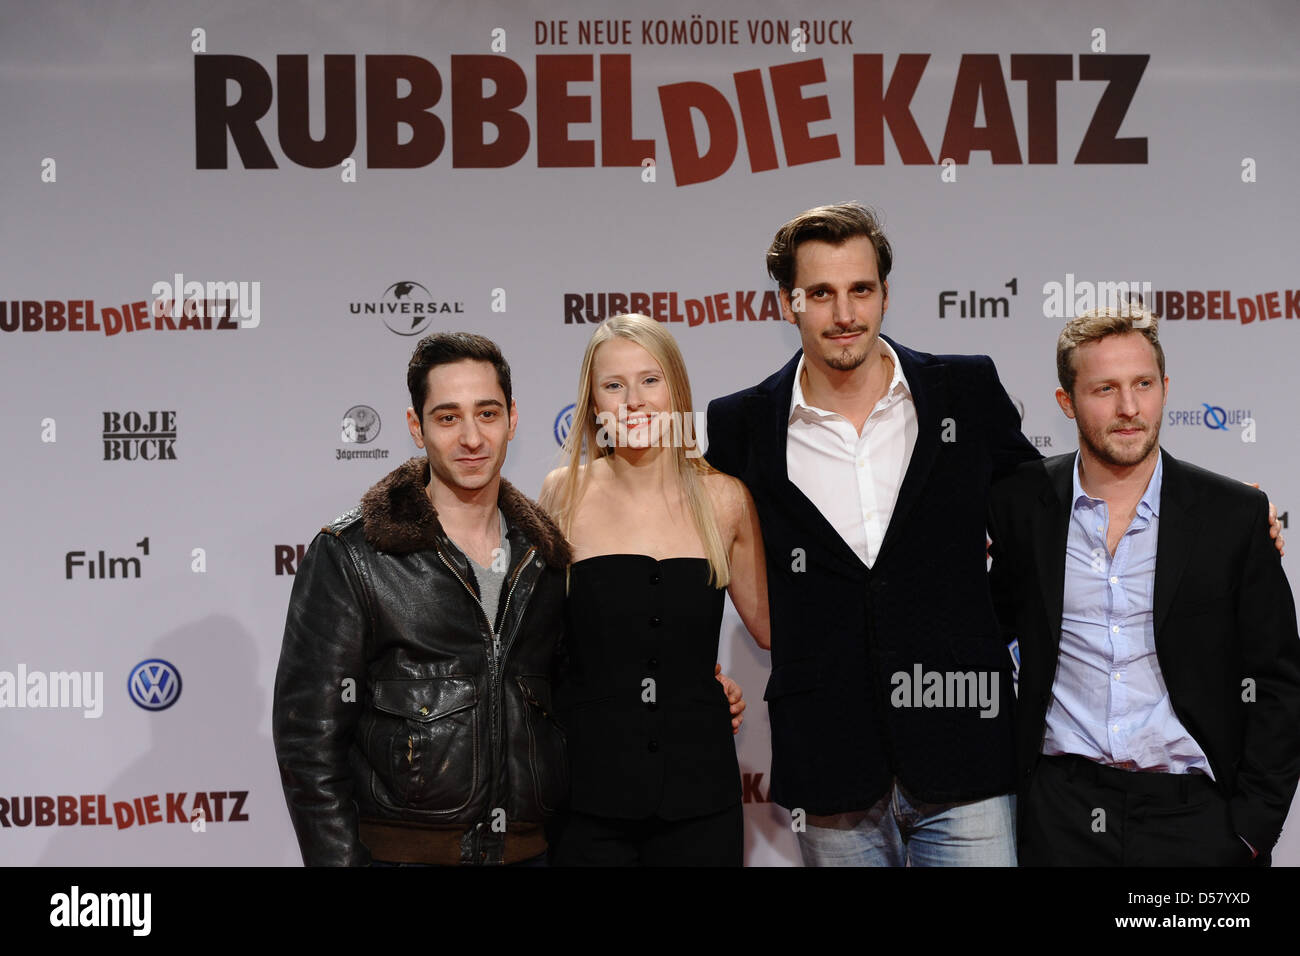 Denis Moschitto, Susanne Bormann, Max von Thun and Maximilian Brueckner at the premiere of 'Rubbeldiekatz' at Cinemaxx Stock Photo